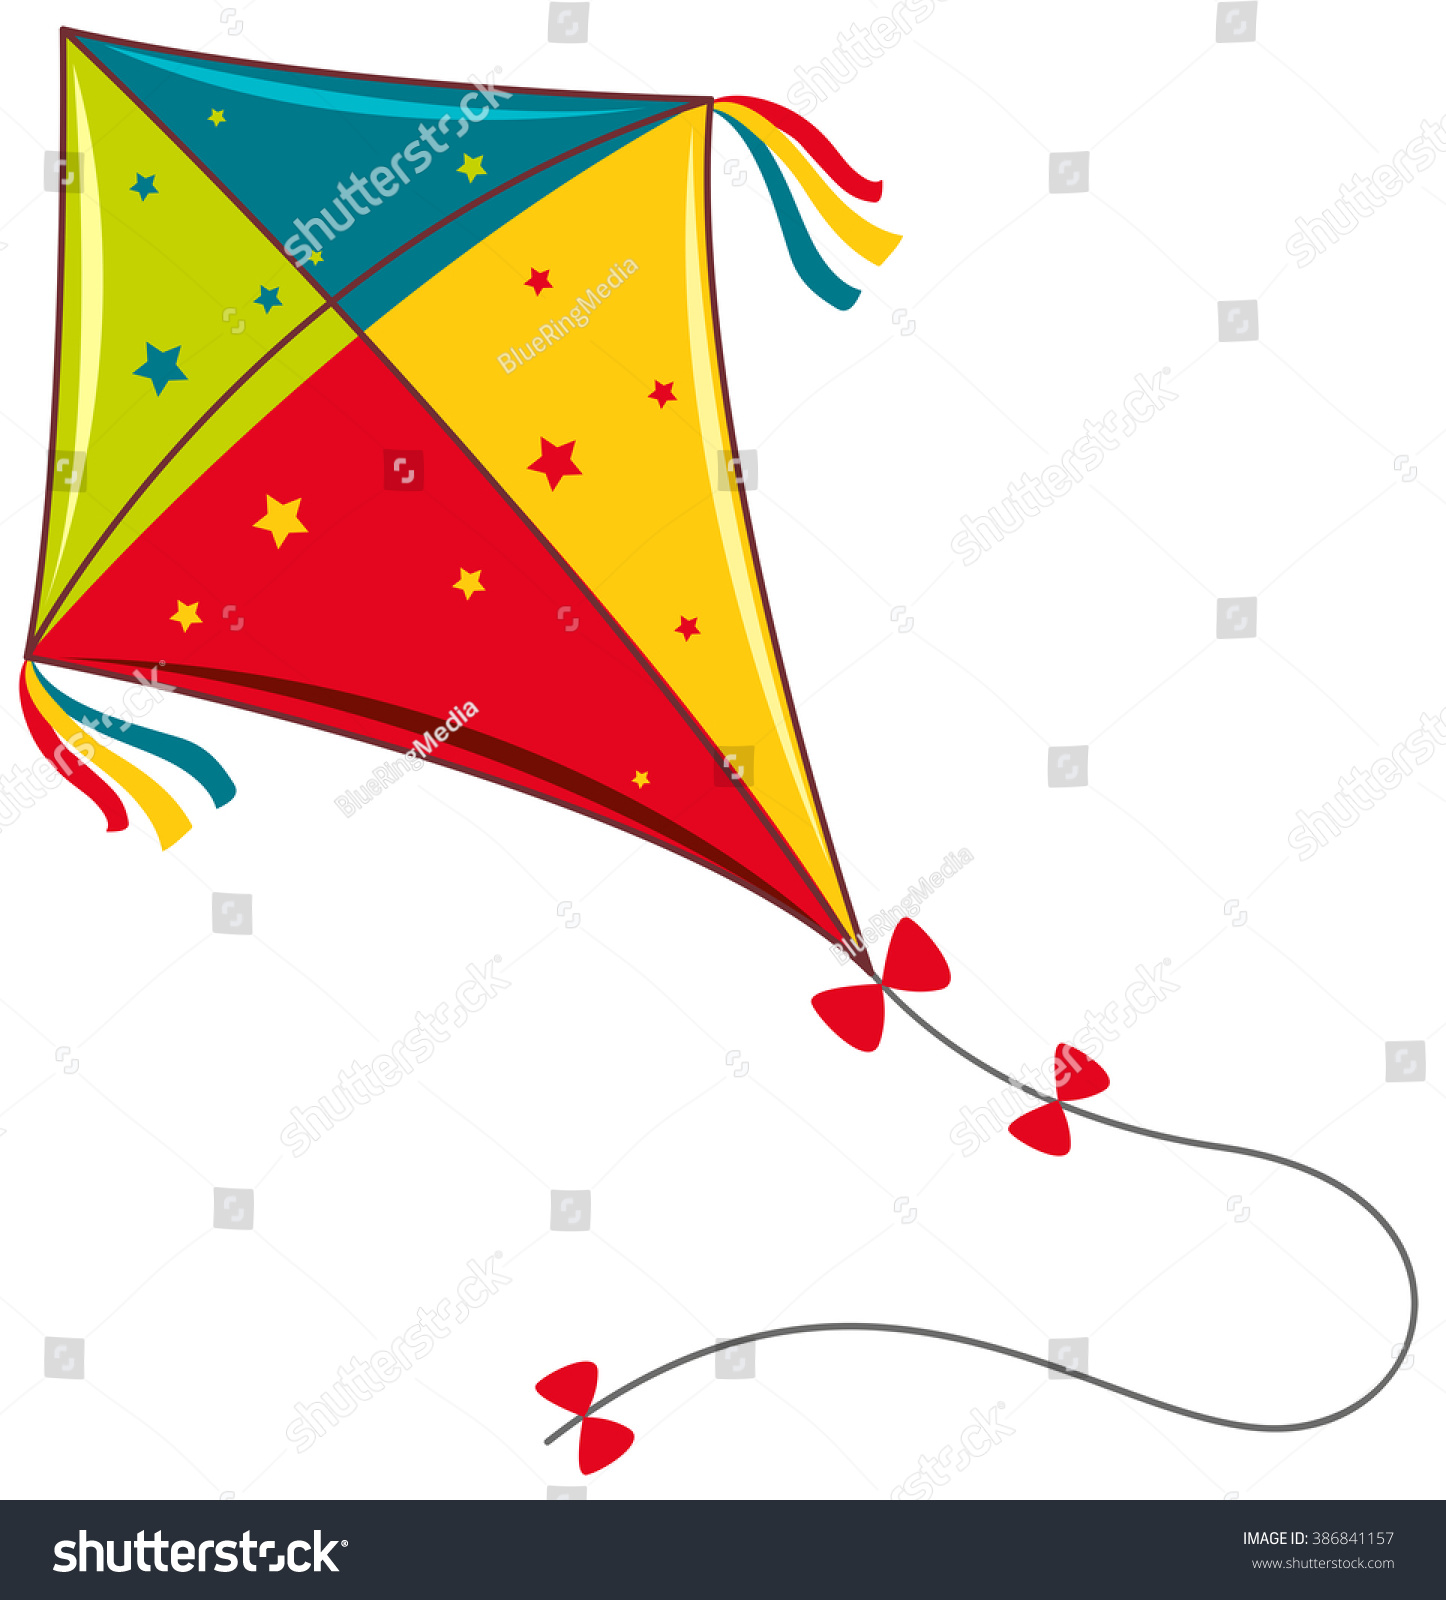 SVG of Colorful kite on white background illustration svg